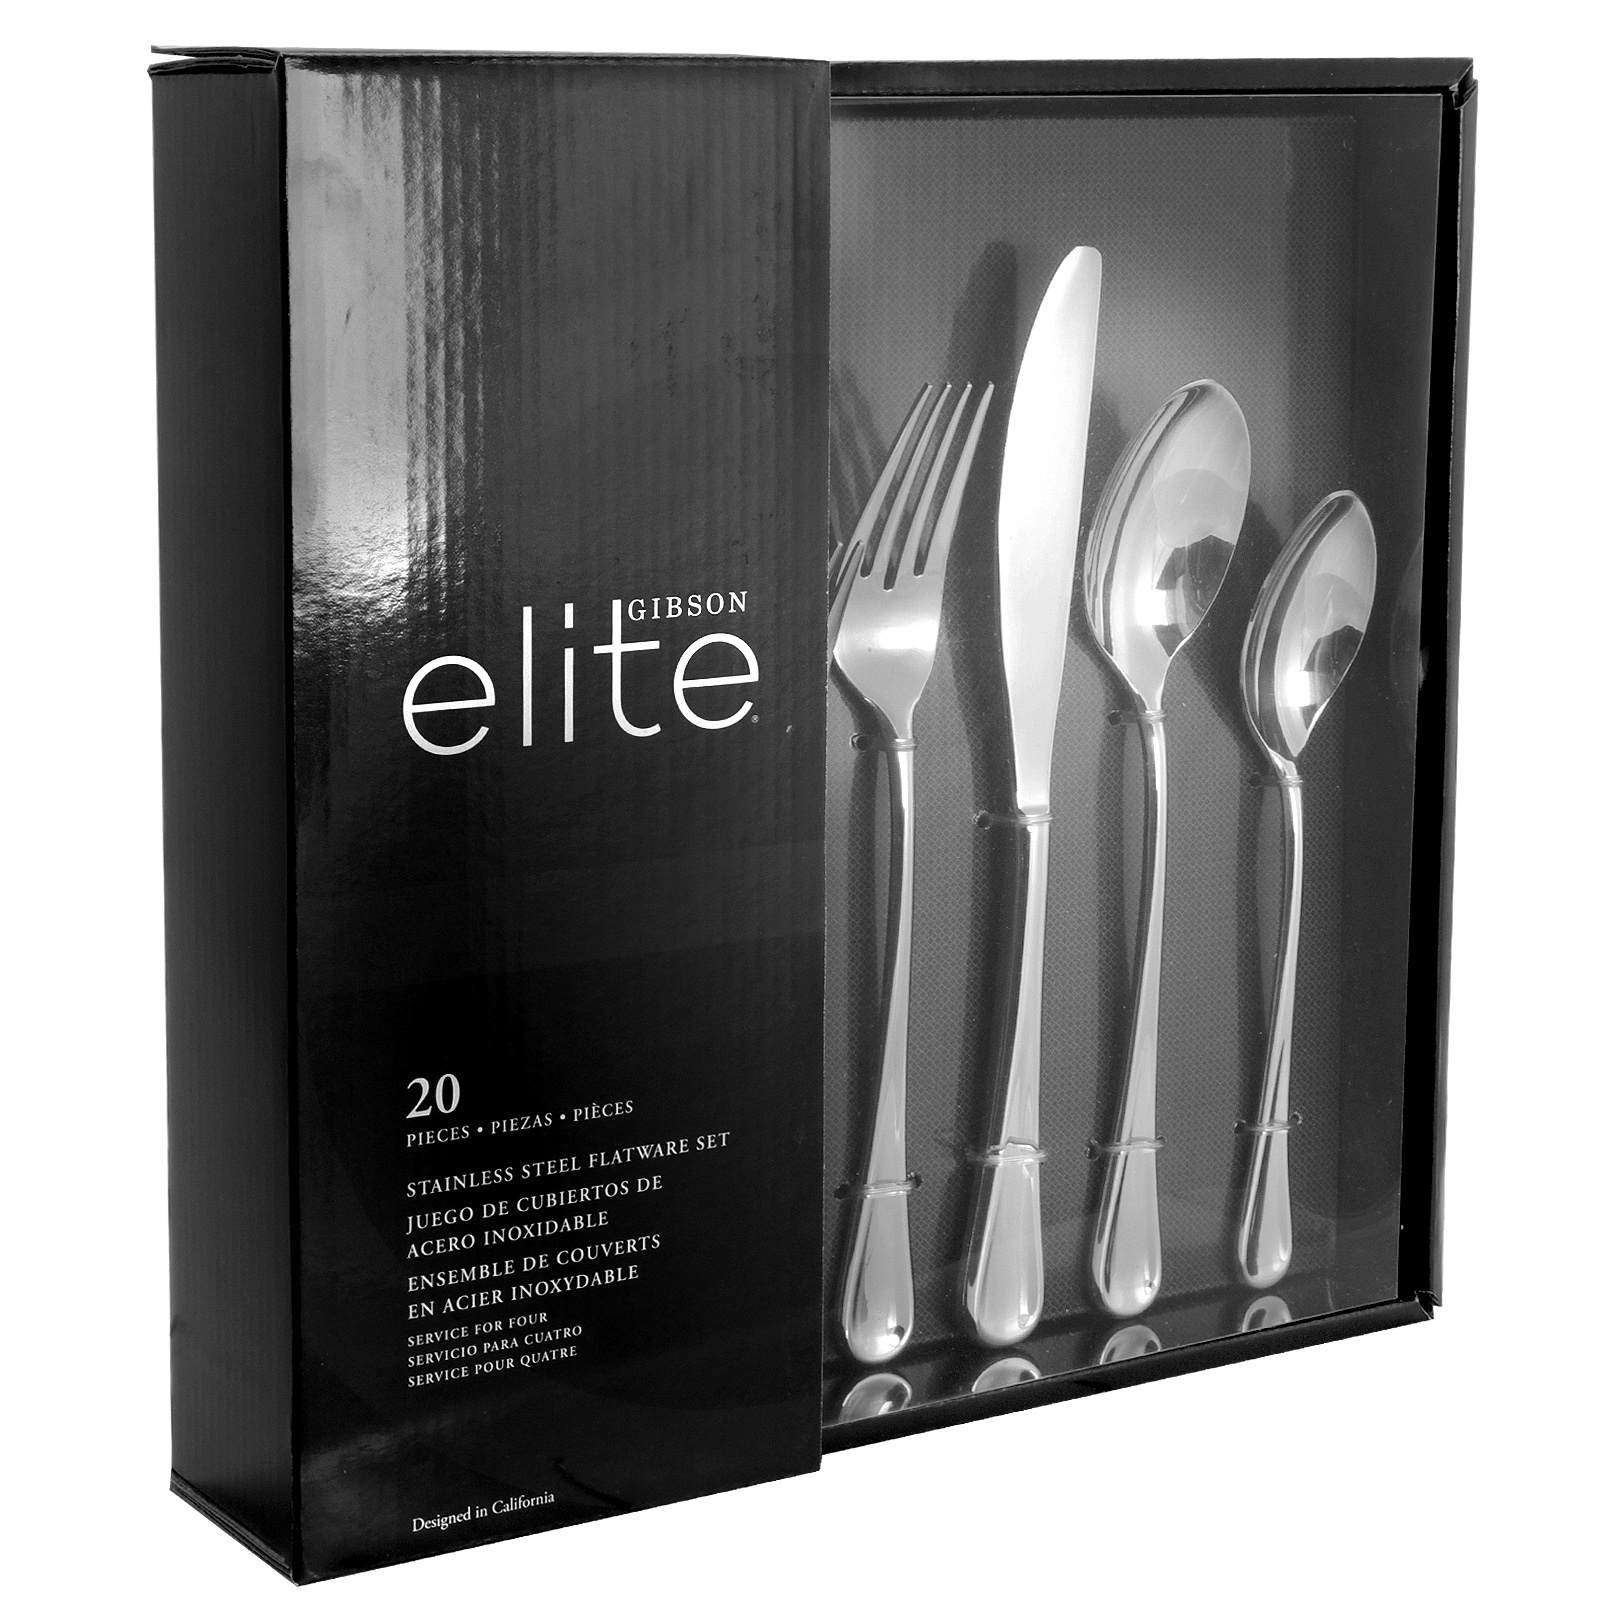 Gibson Elite Elite York 20 Piece Flatware Set